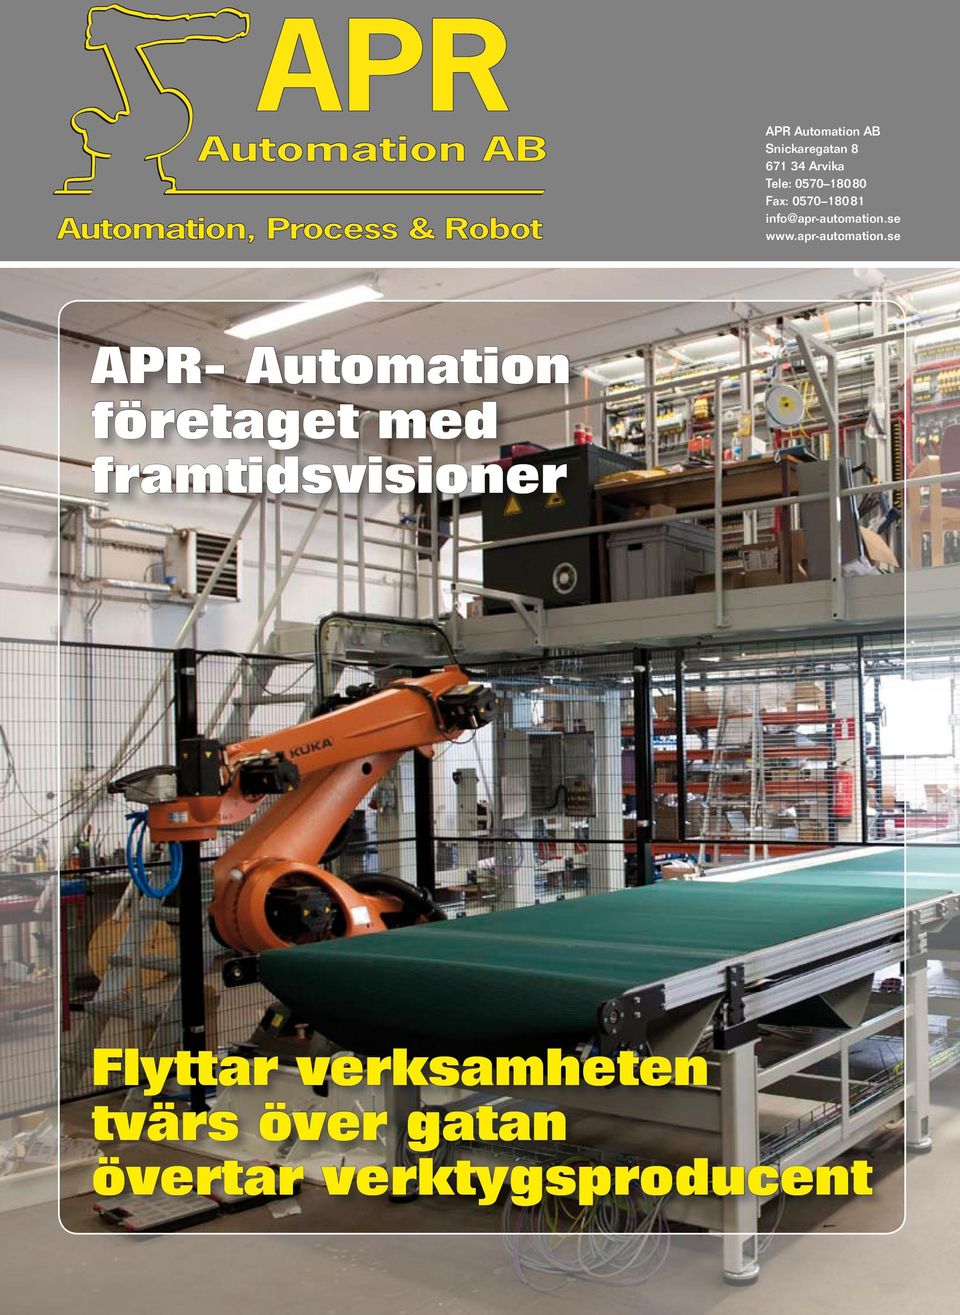 info@apr-automation.